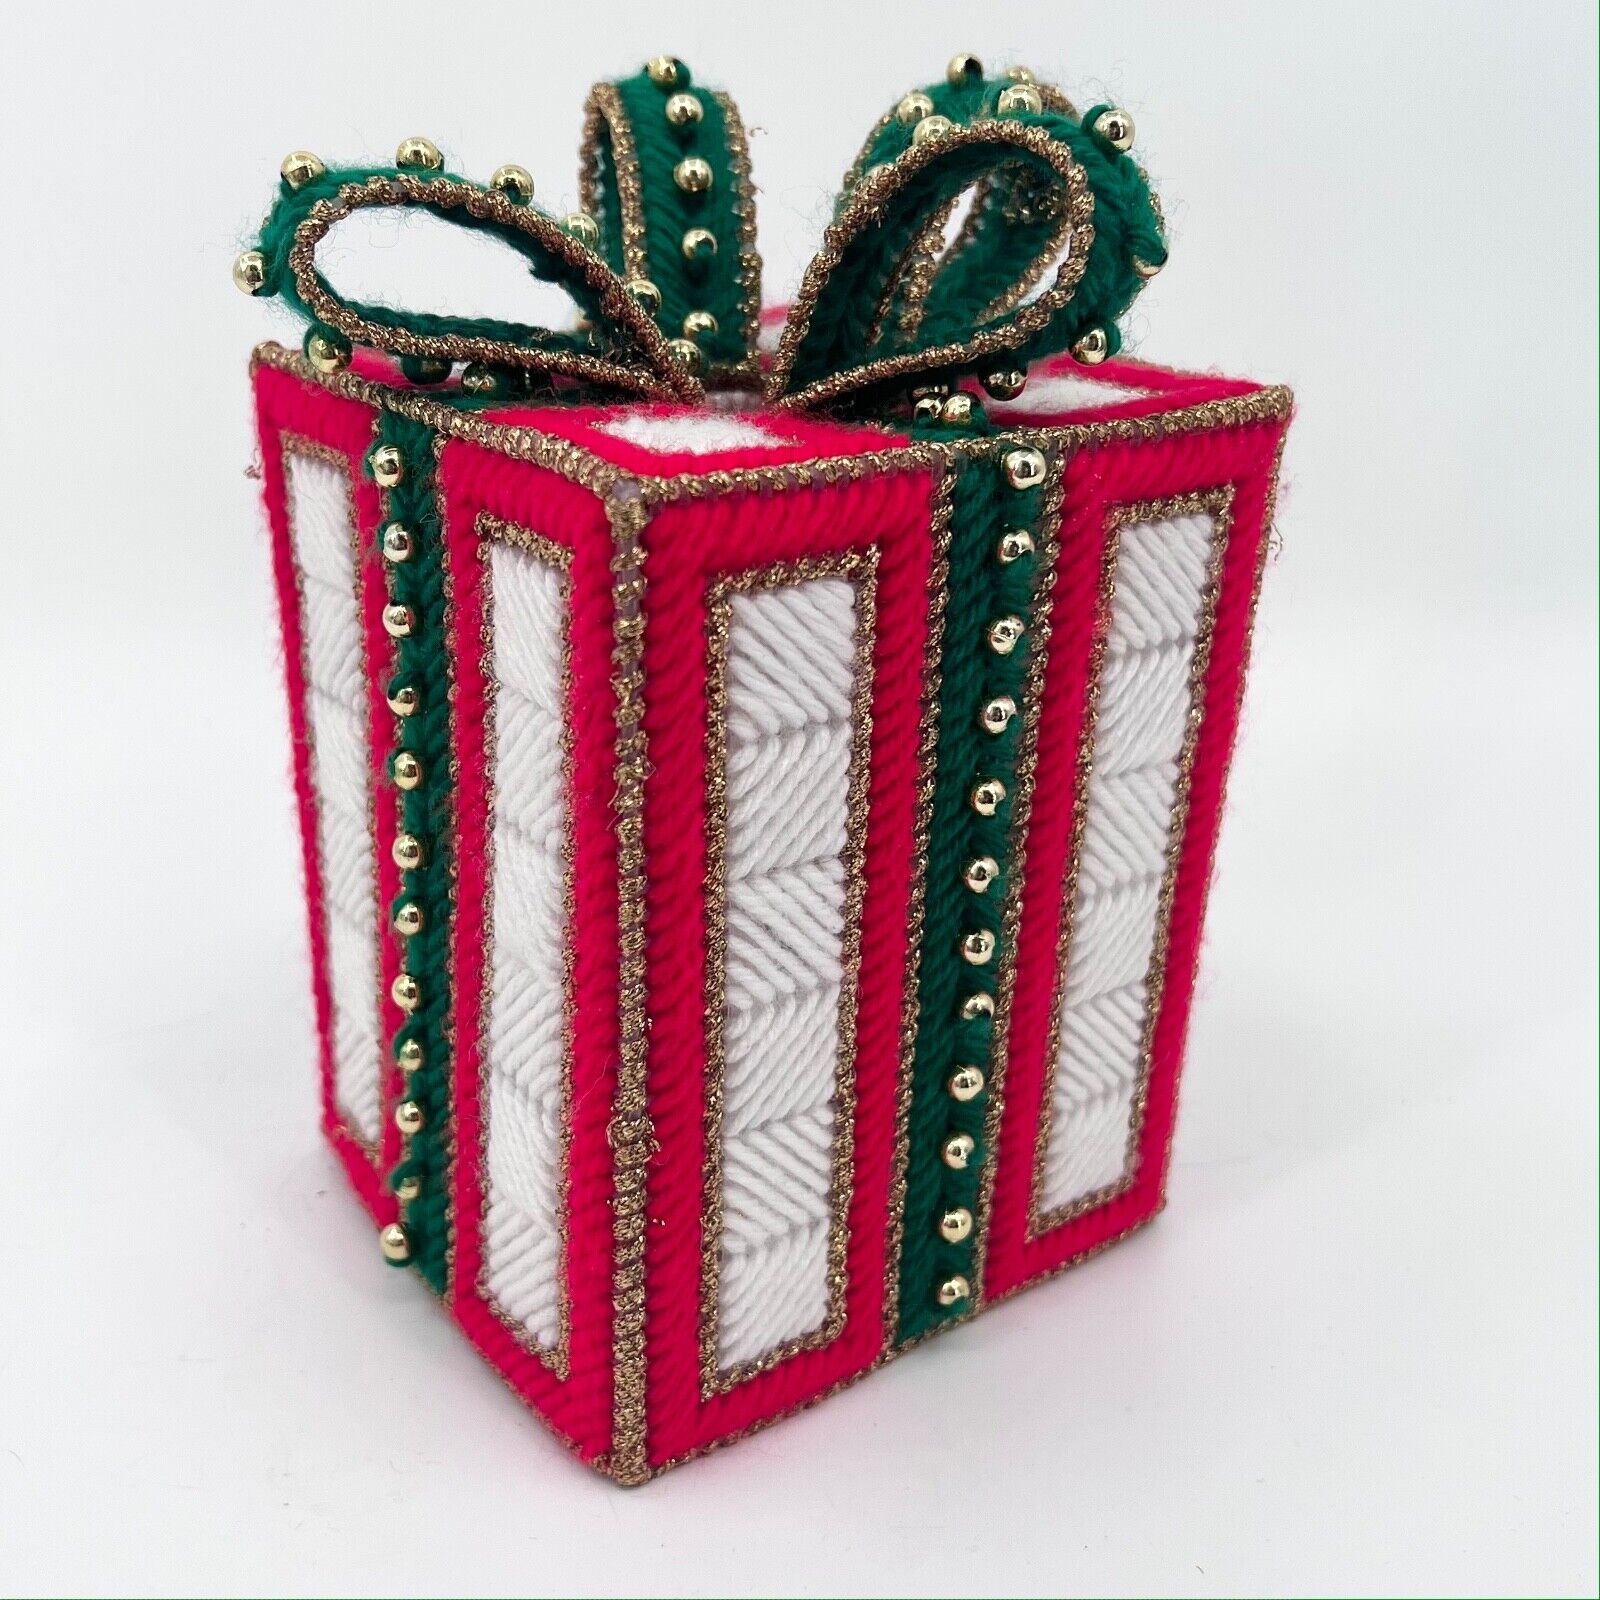 Vintage Handmade Needlepoint Christmas Present Tissue Box Cover Holder w/ Beads